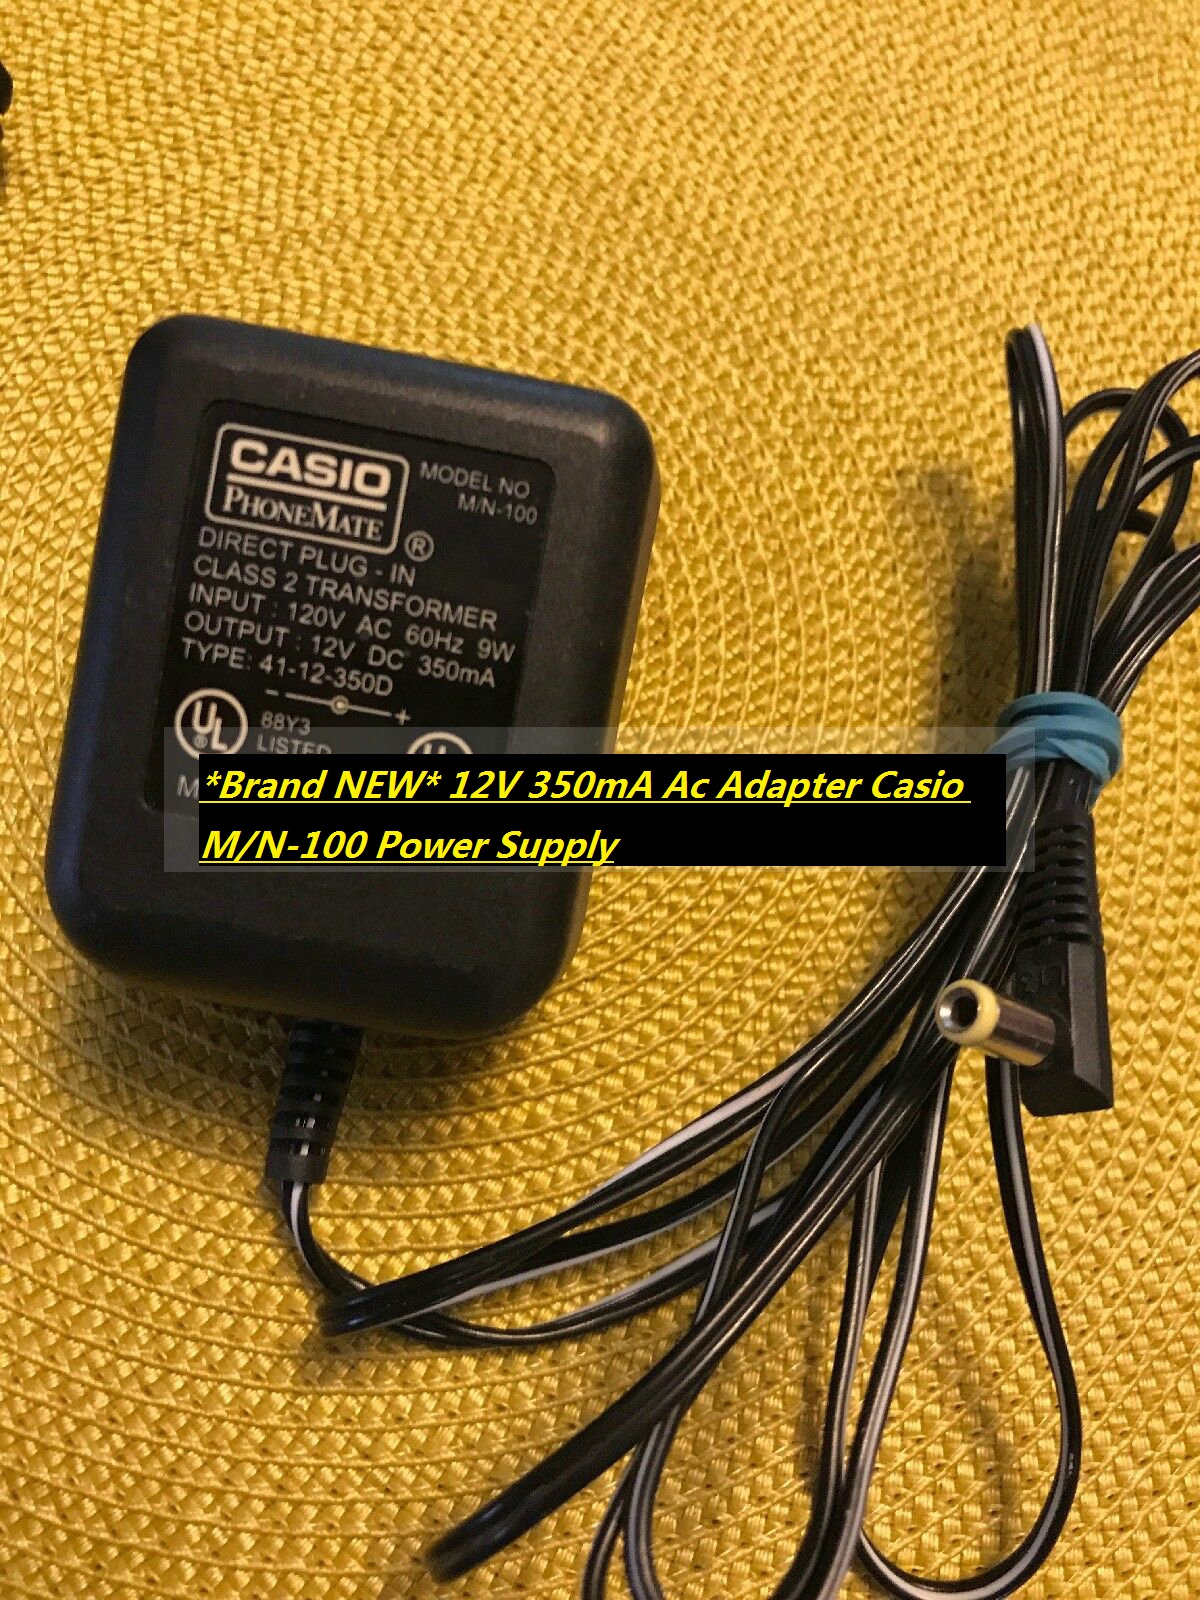 *Brand NEW* 12V 350mA Ac Adapter Casio M/N-100 Power Supply